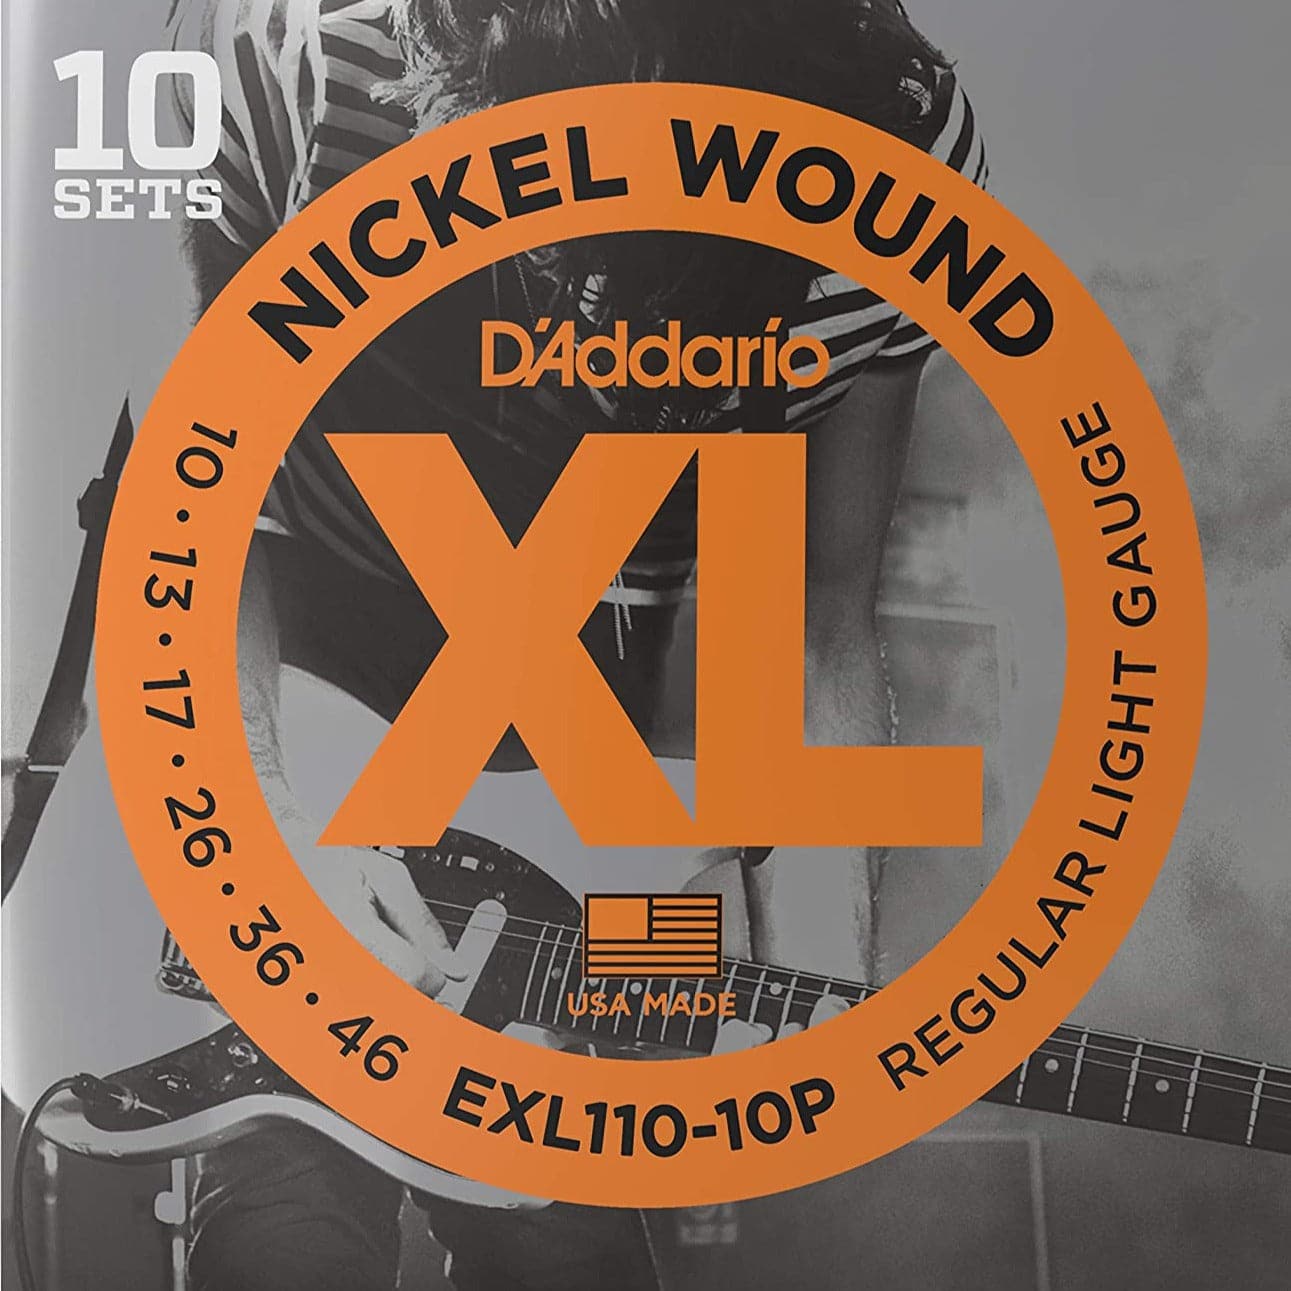 D'Addario EXL110-10P XL Electric Guitar Strings - Regular Light - 10-46 - 10 Pack